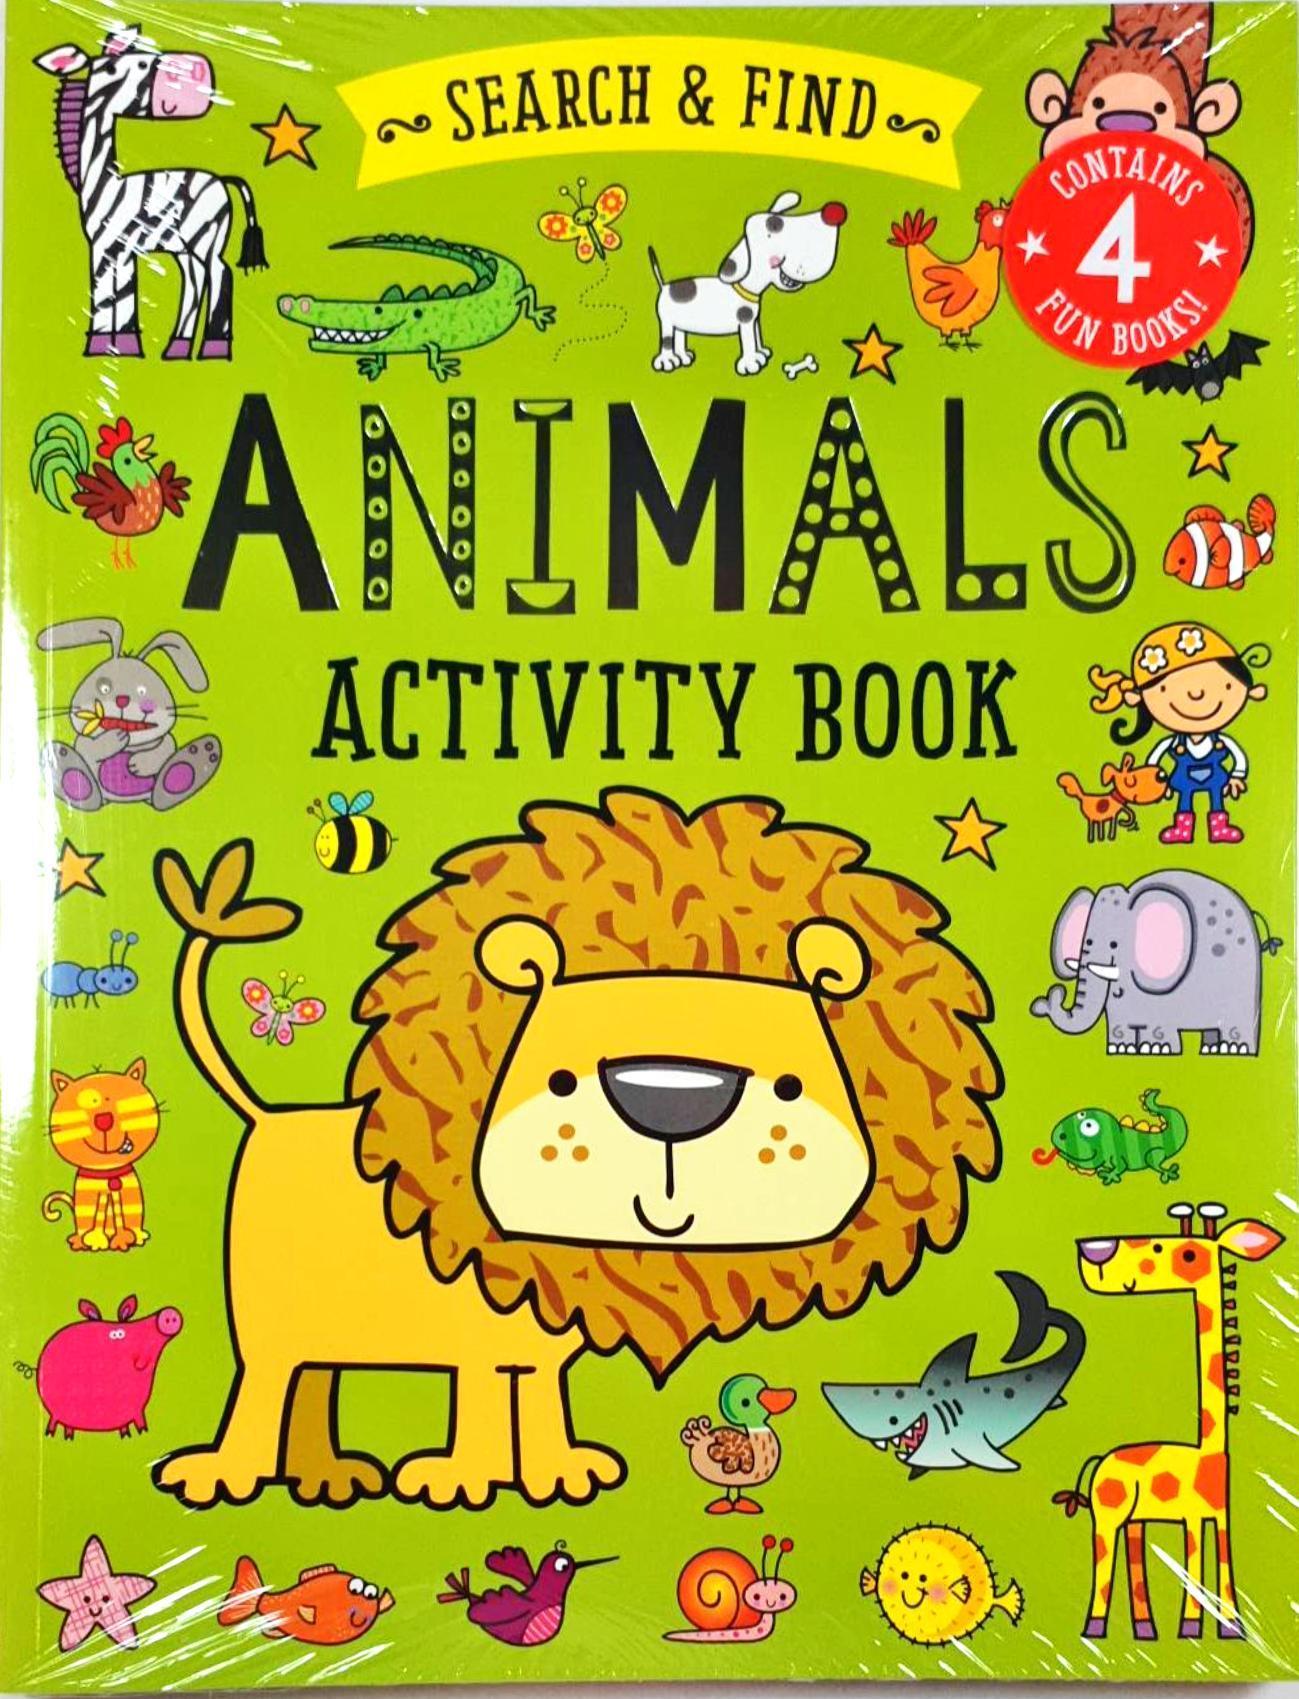 Search & Find Activity Book (4 Fun Books)